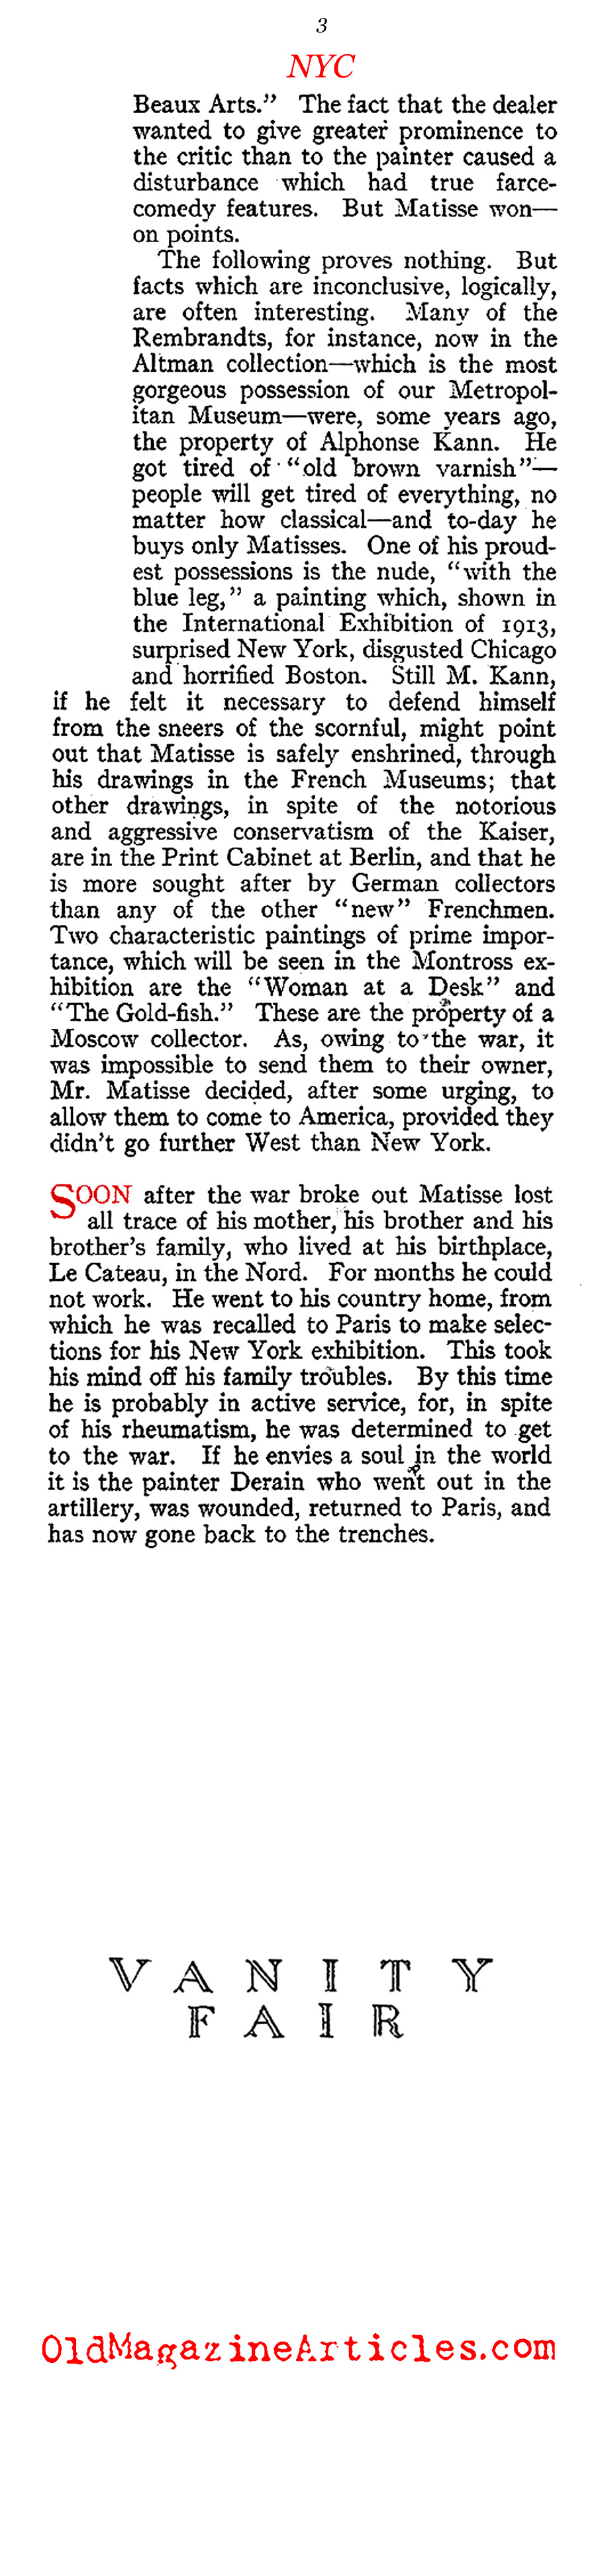 Henri Matisse Viewing in New York  (Vanity Fair, 1915)